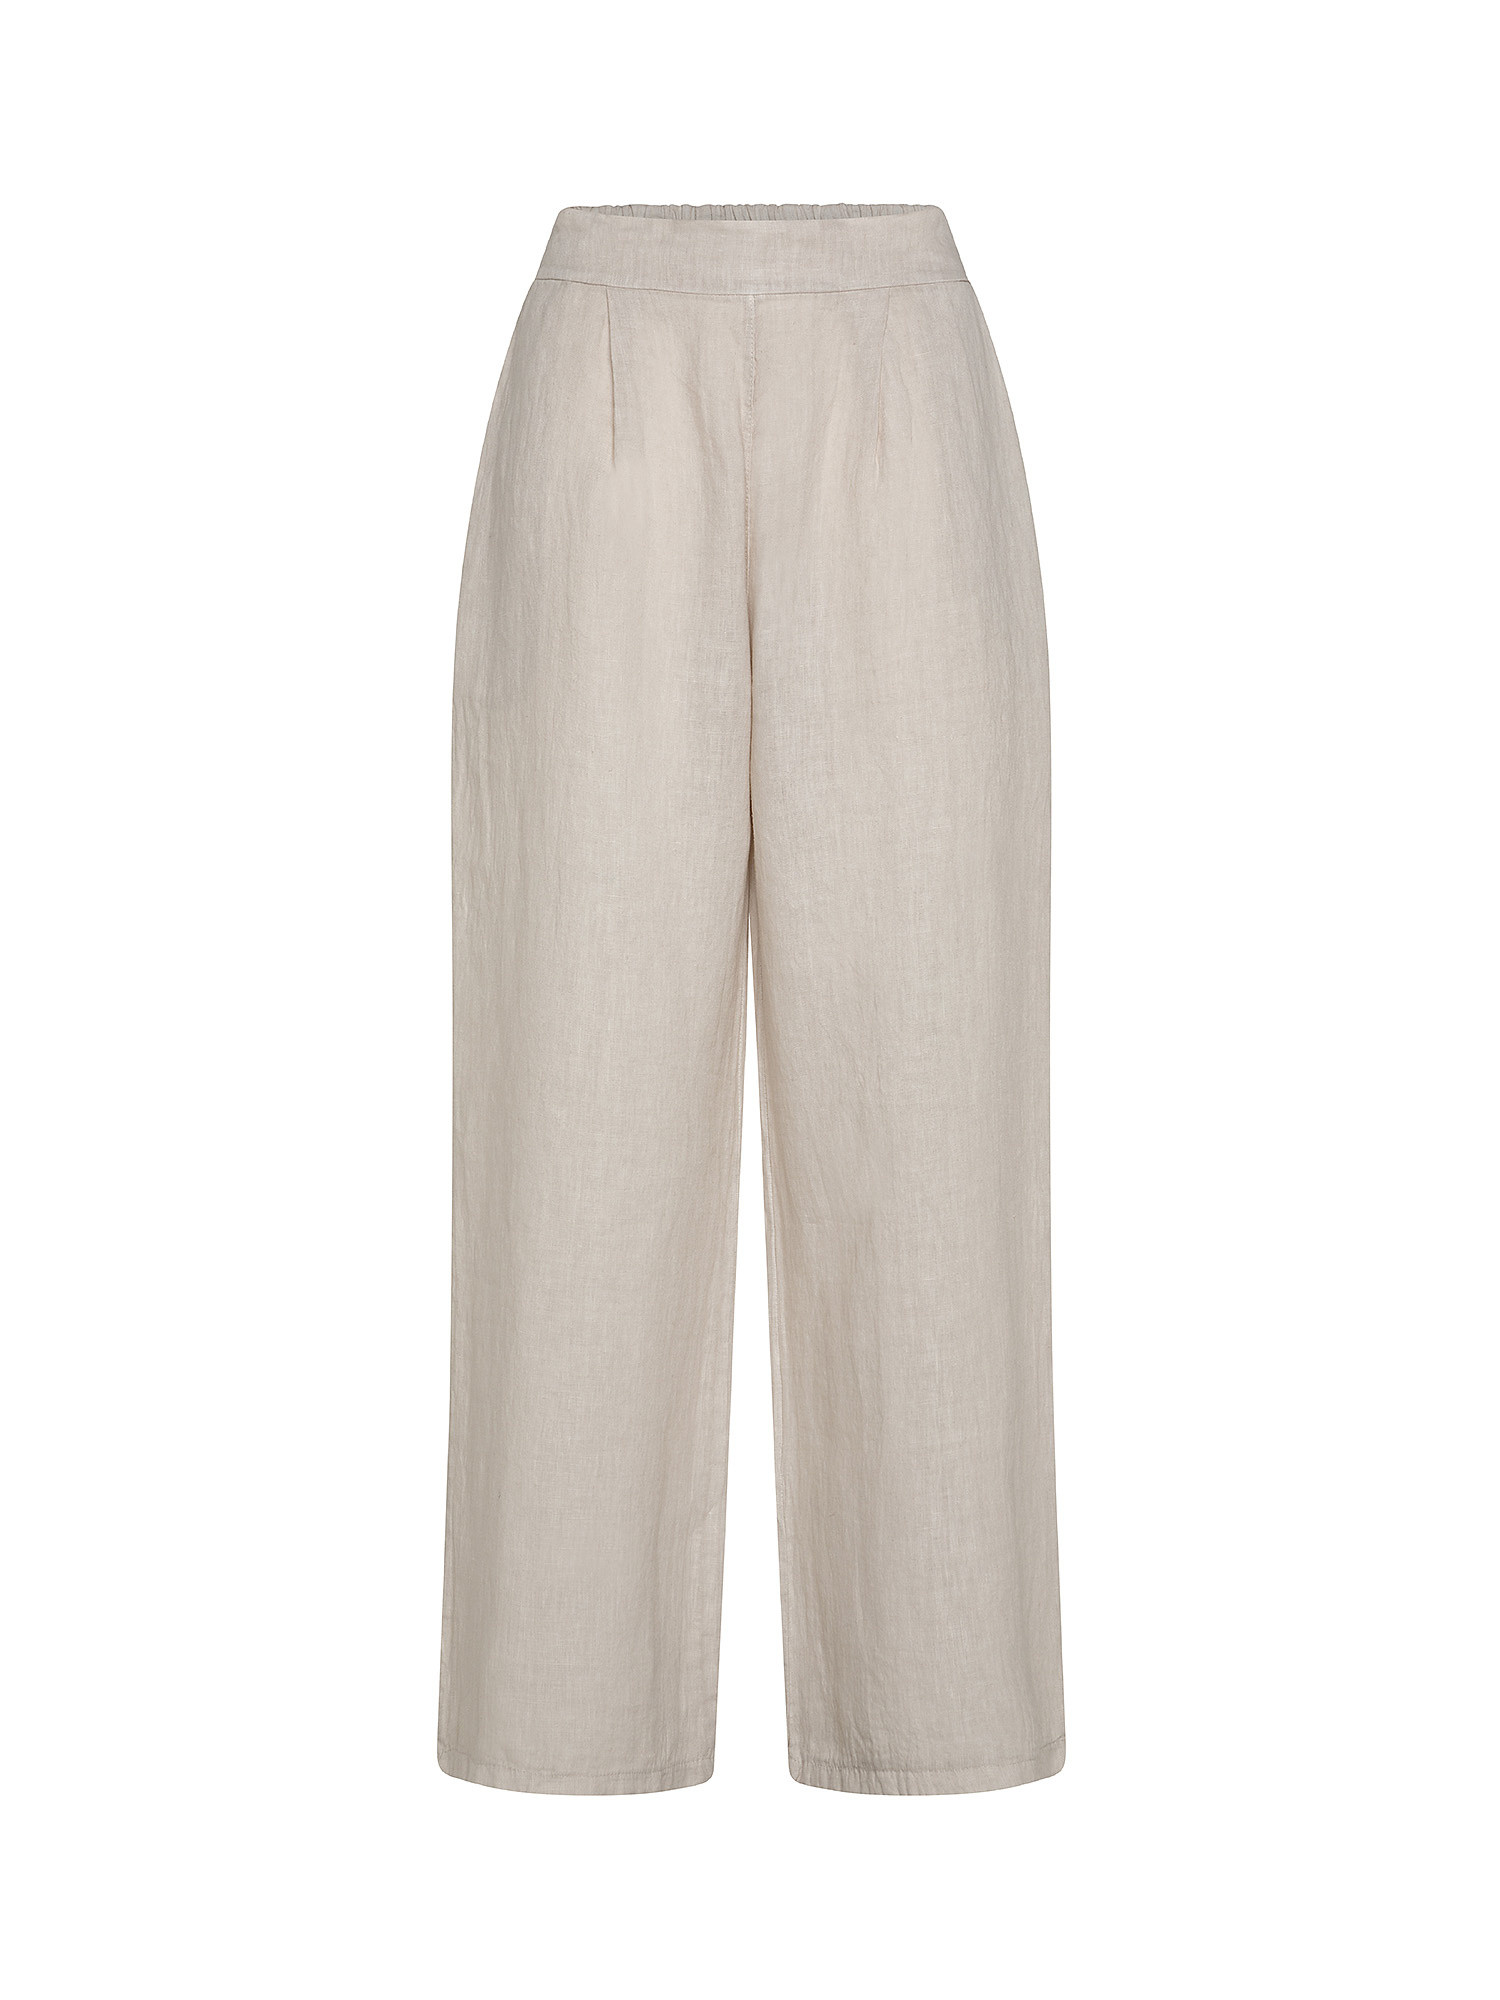 Pantalone ampio puro lino, Beige, large image number 0